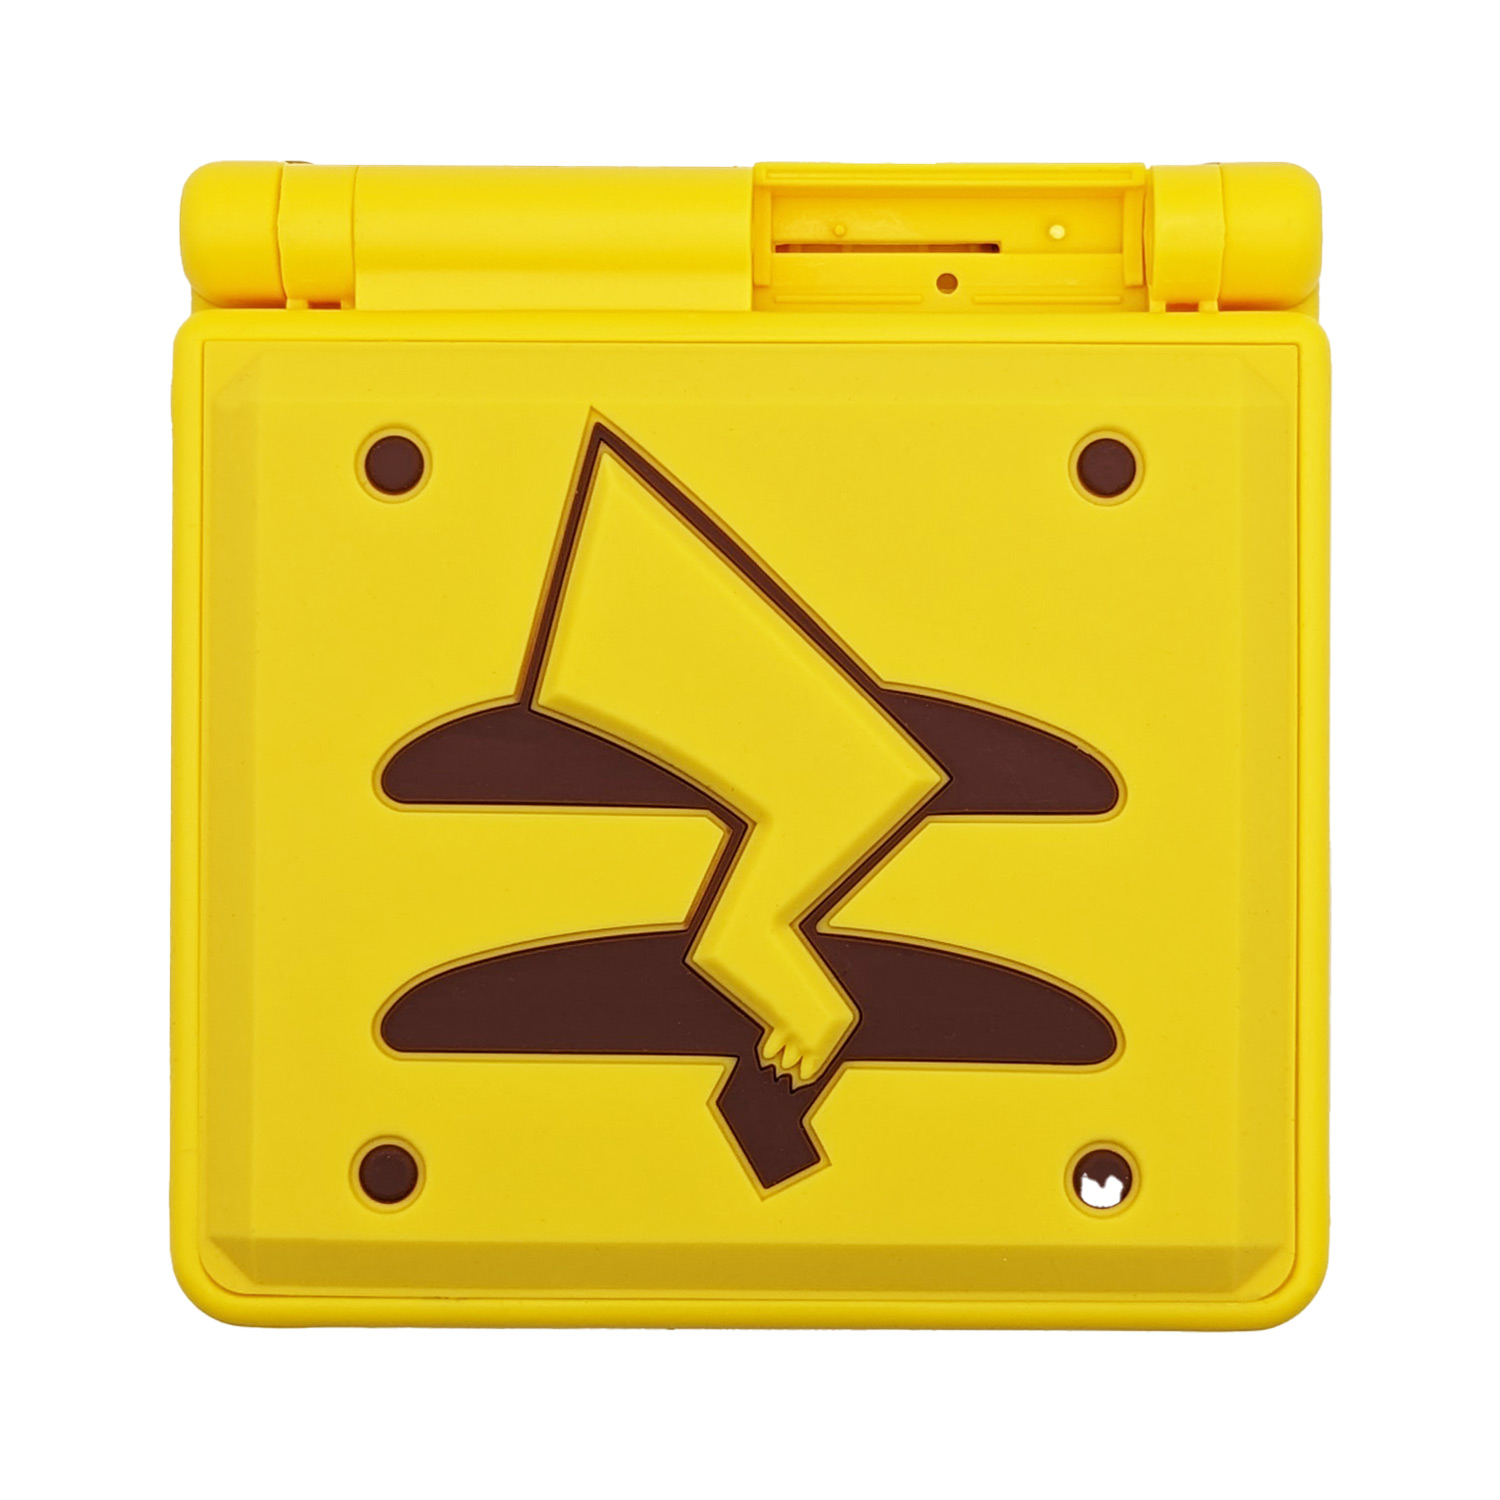 Game Boy Advance SP etui (Pikachu)